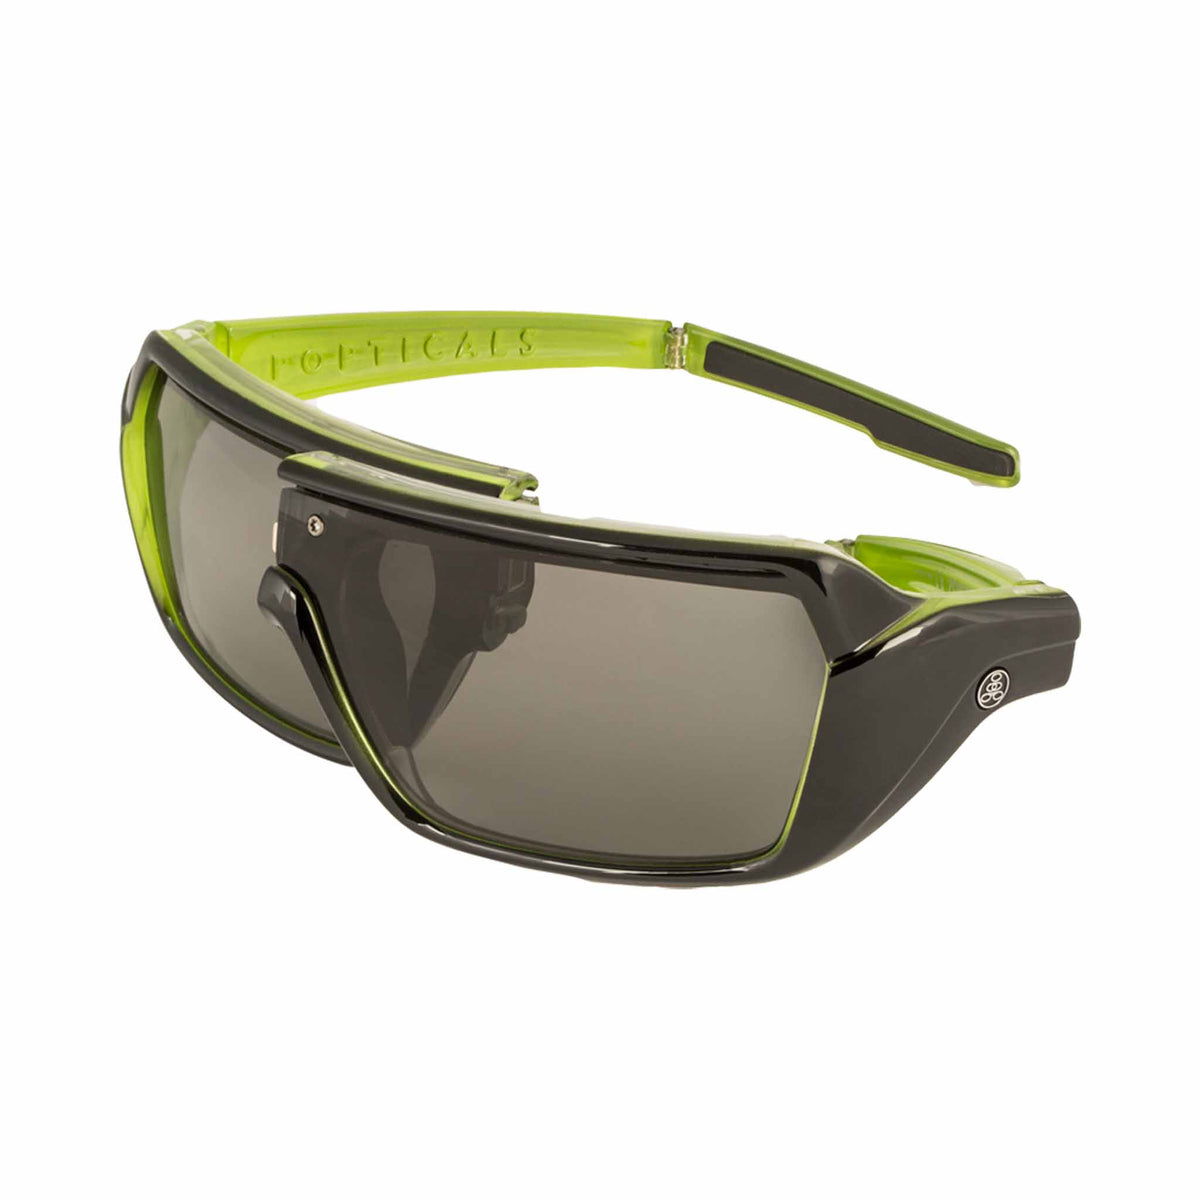 Popticals, Premium Compact Sunglasses, PopStorm, 010060-GLGP, Polarized Sunglasses, Gloss Black/Green Crystal Frame, Gray Lenses, Spider View